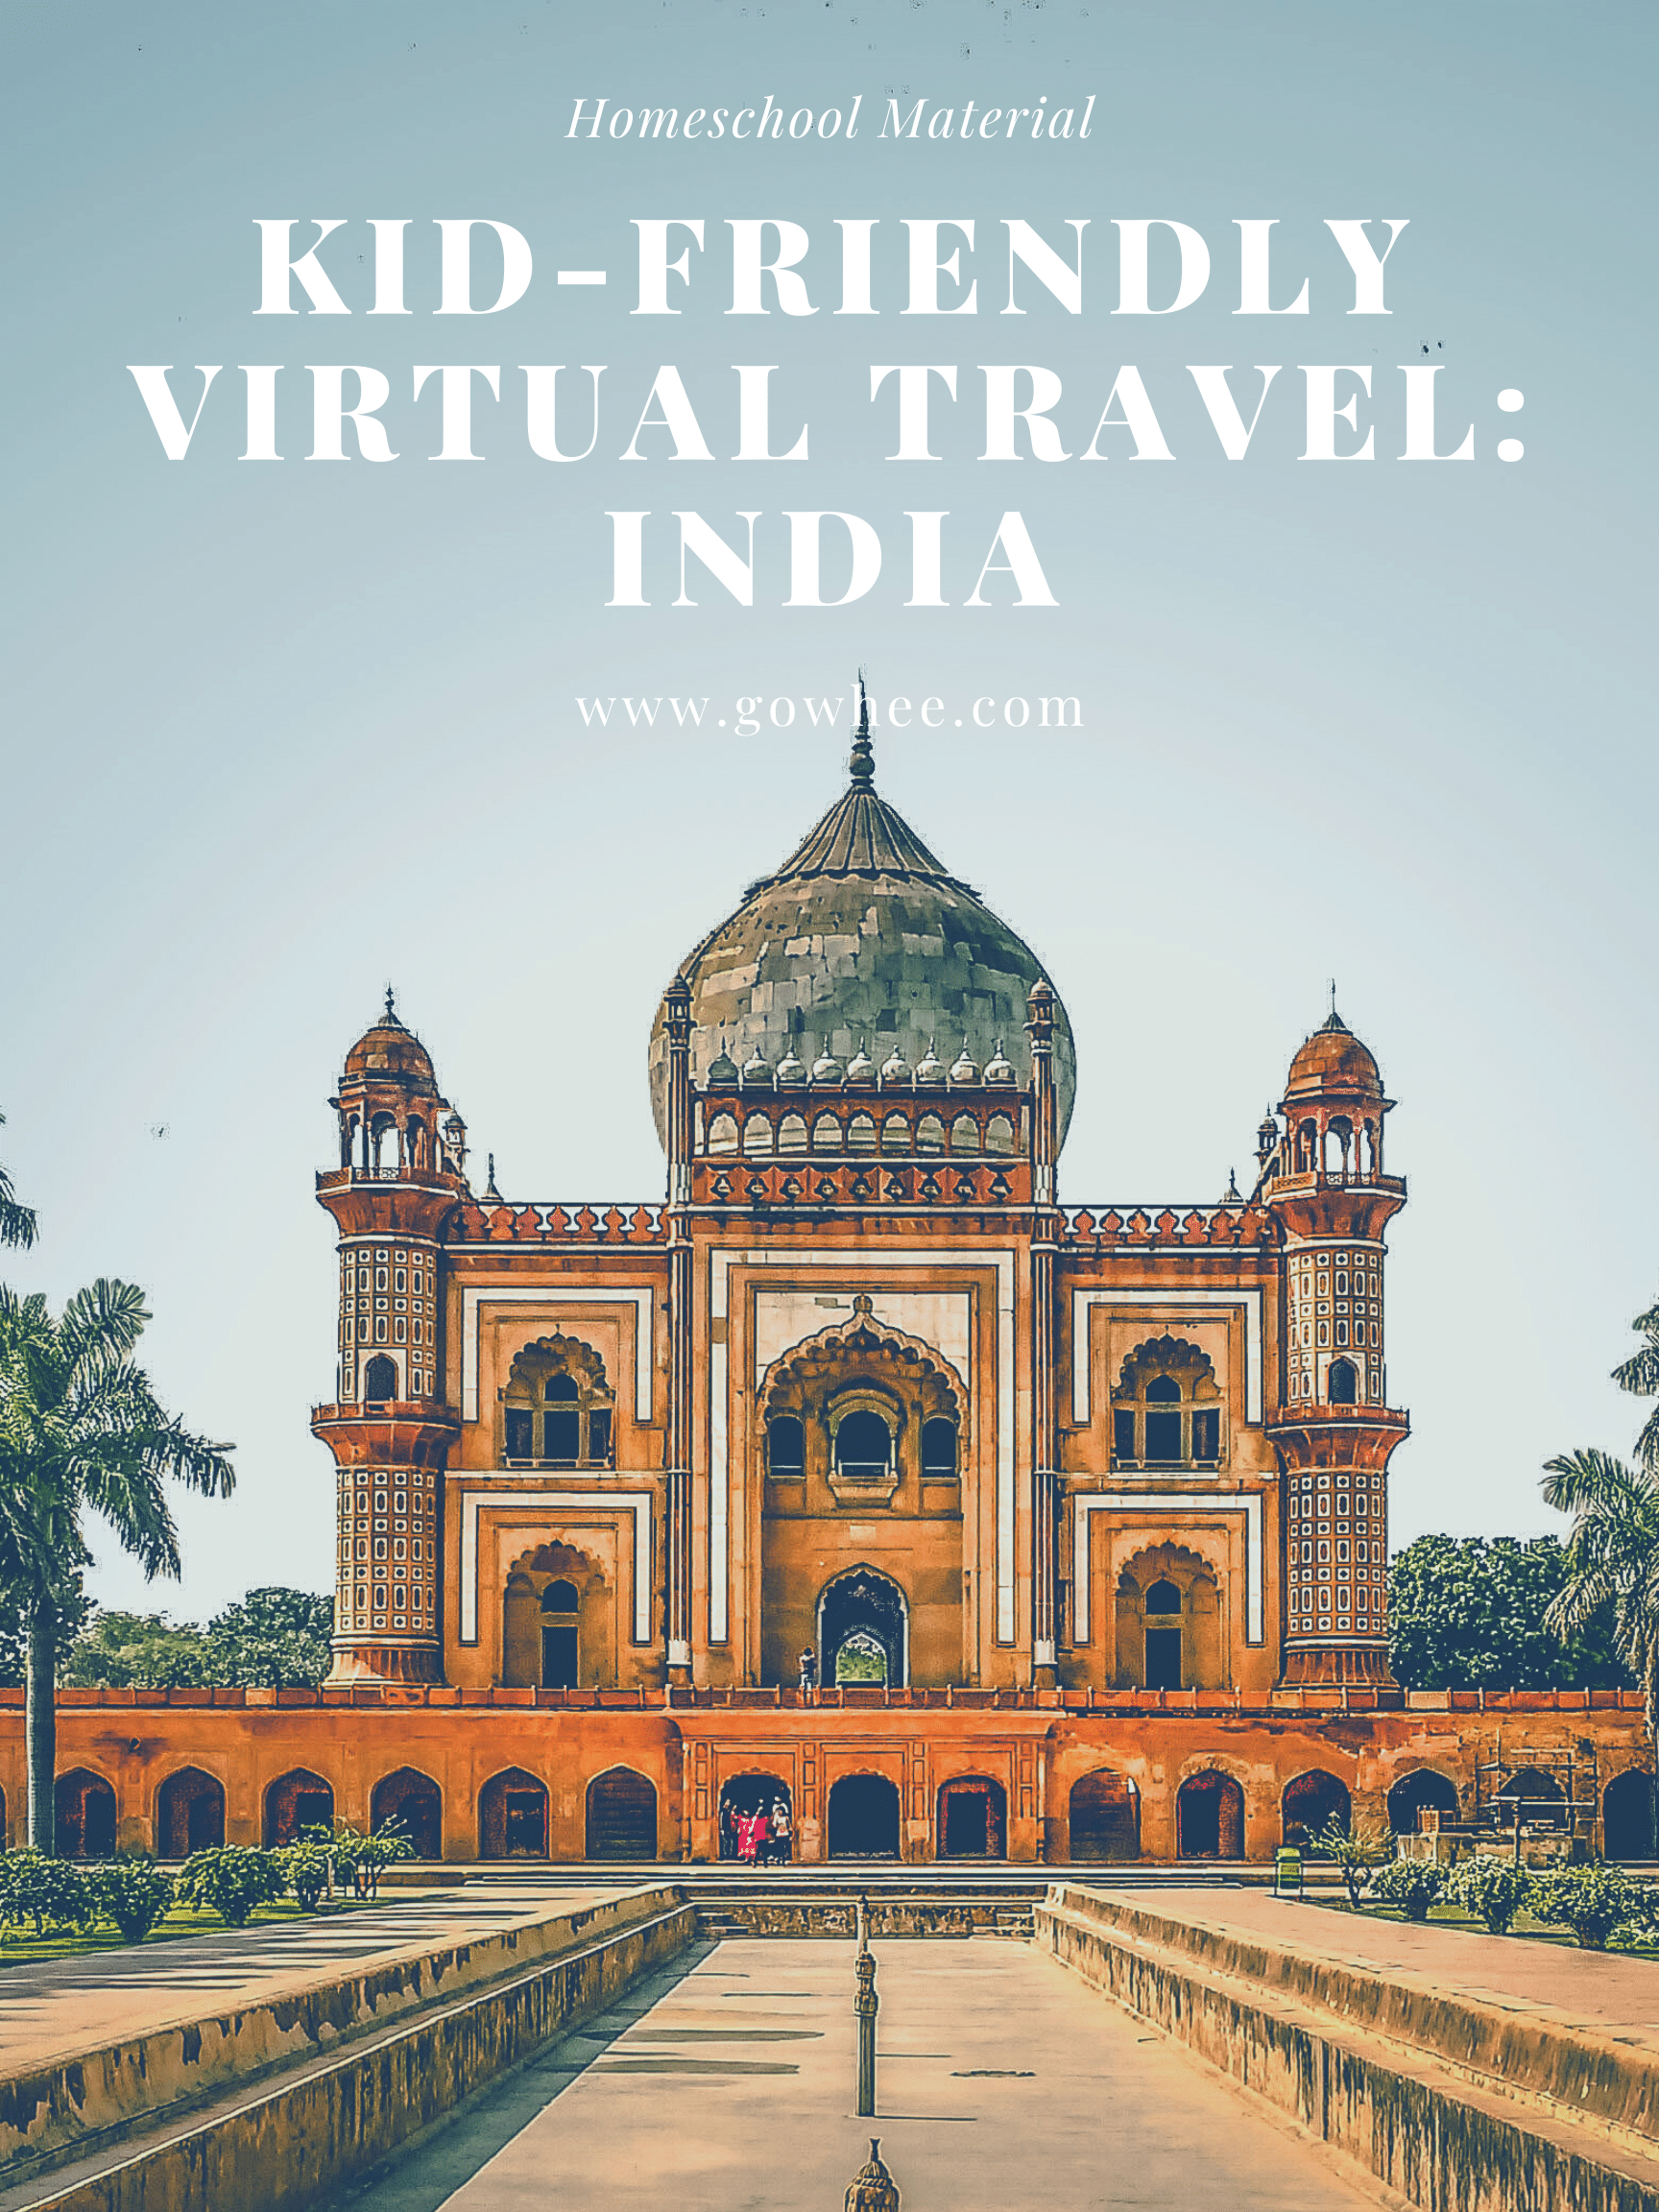 Kid-Friendly Virtual Travel - Homeschool, worldschool activities to learn about india. #homescool #worldschool #kidfriendly #virtualtravel #india #tajMahal #kidsactivities